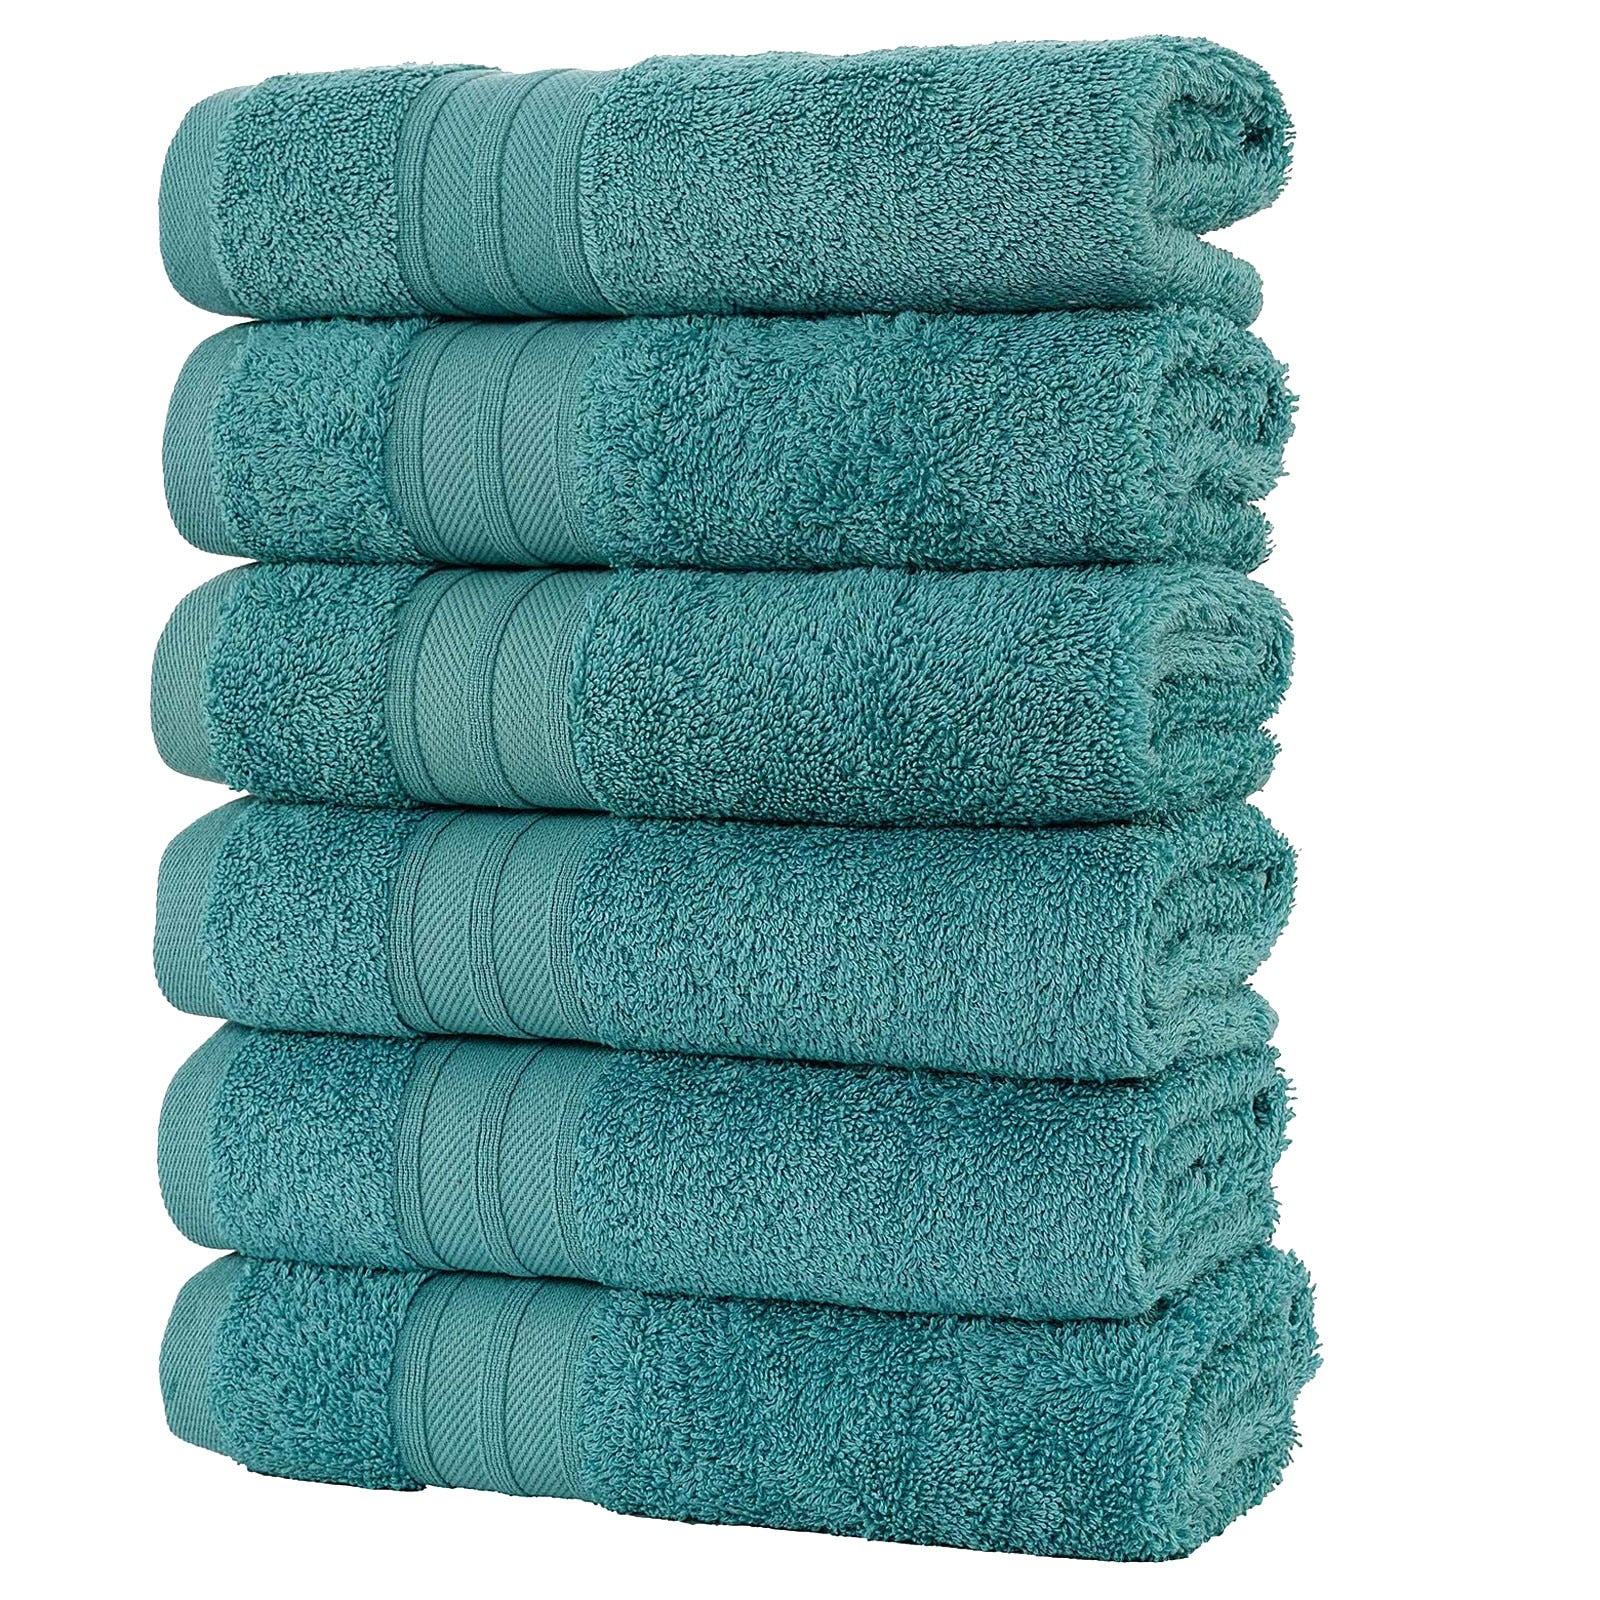  RTEDEATL Towels Pure Cotton Soft Absorbent Towel Adult